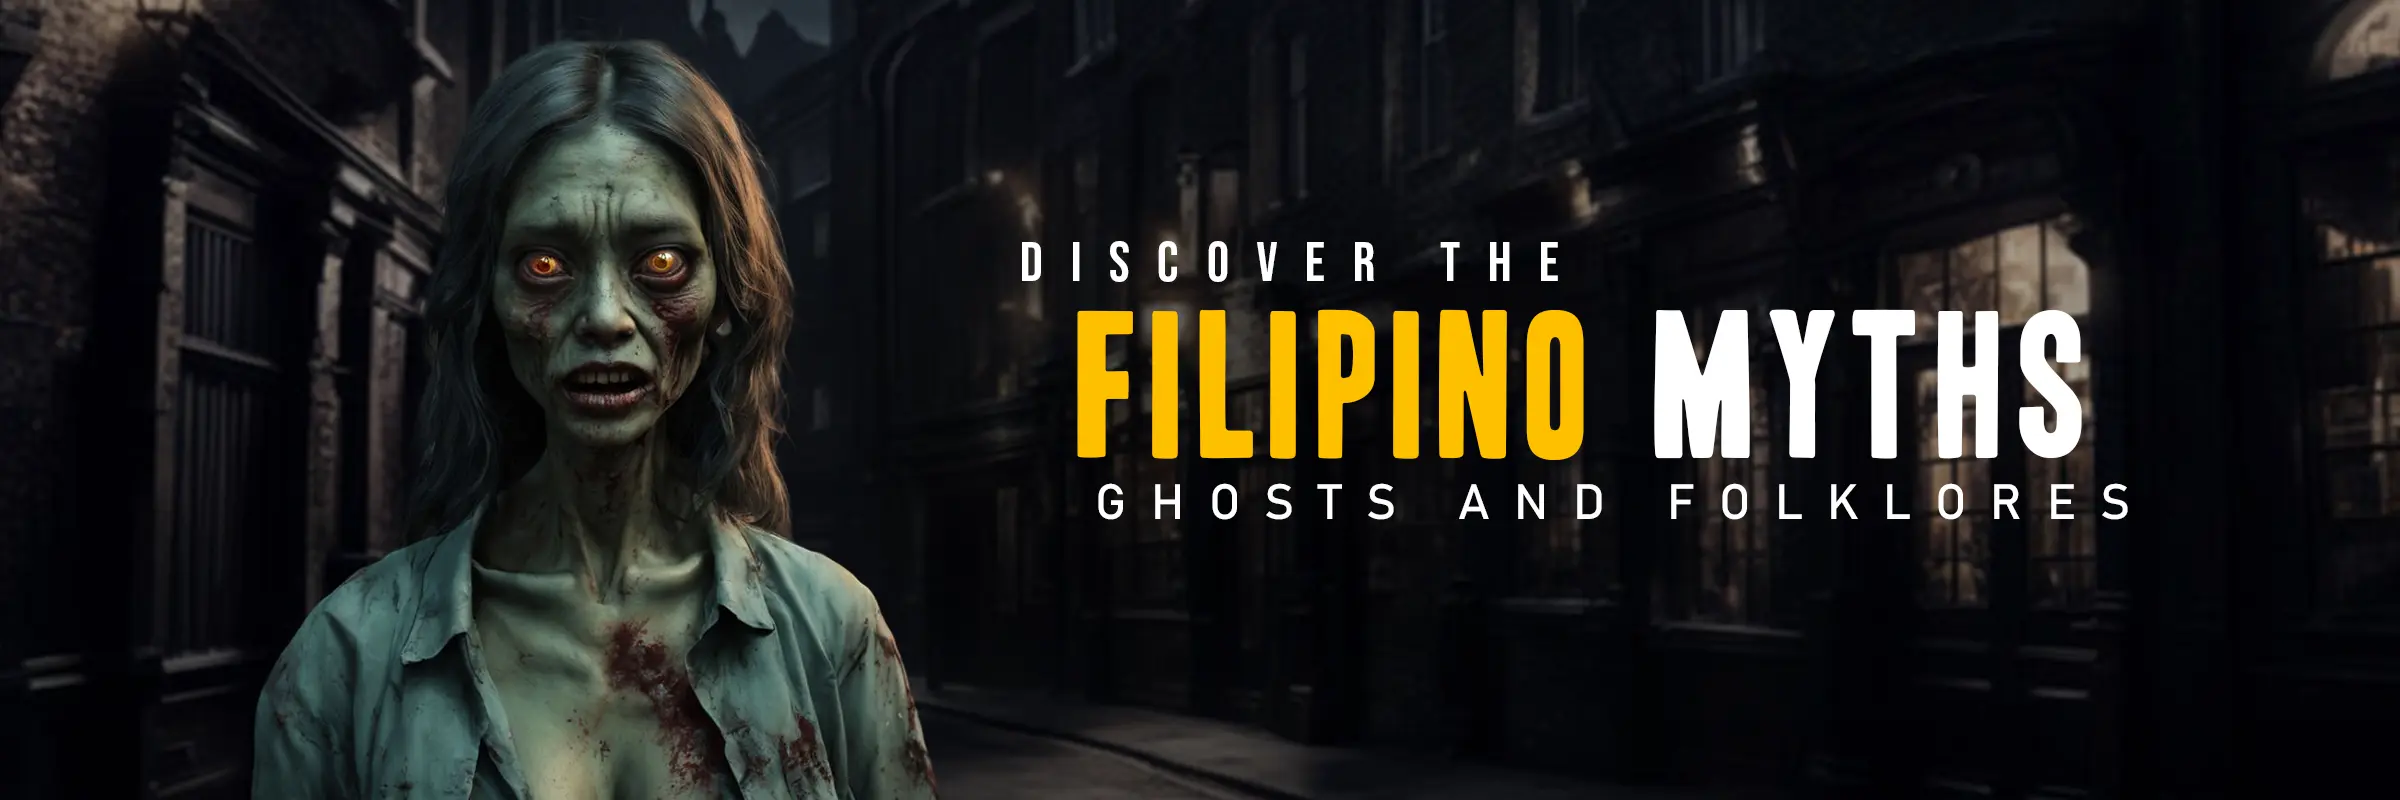 FILIPINO MYTHS AND FOLKLORE